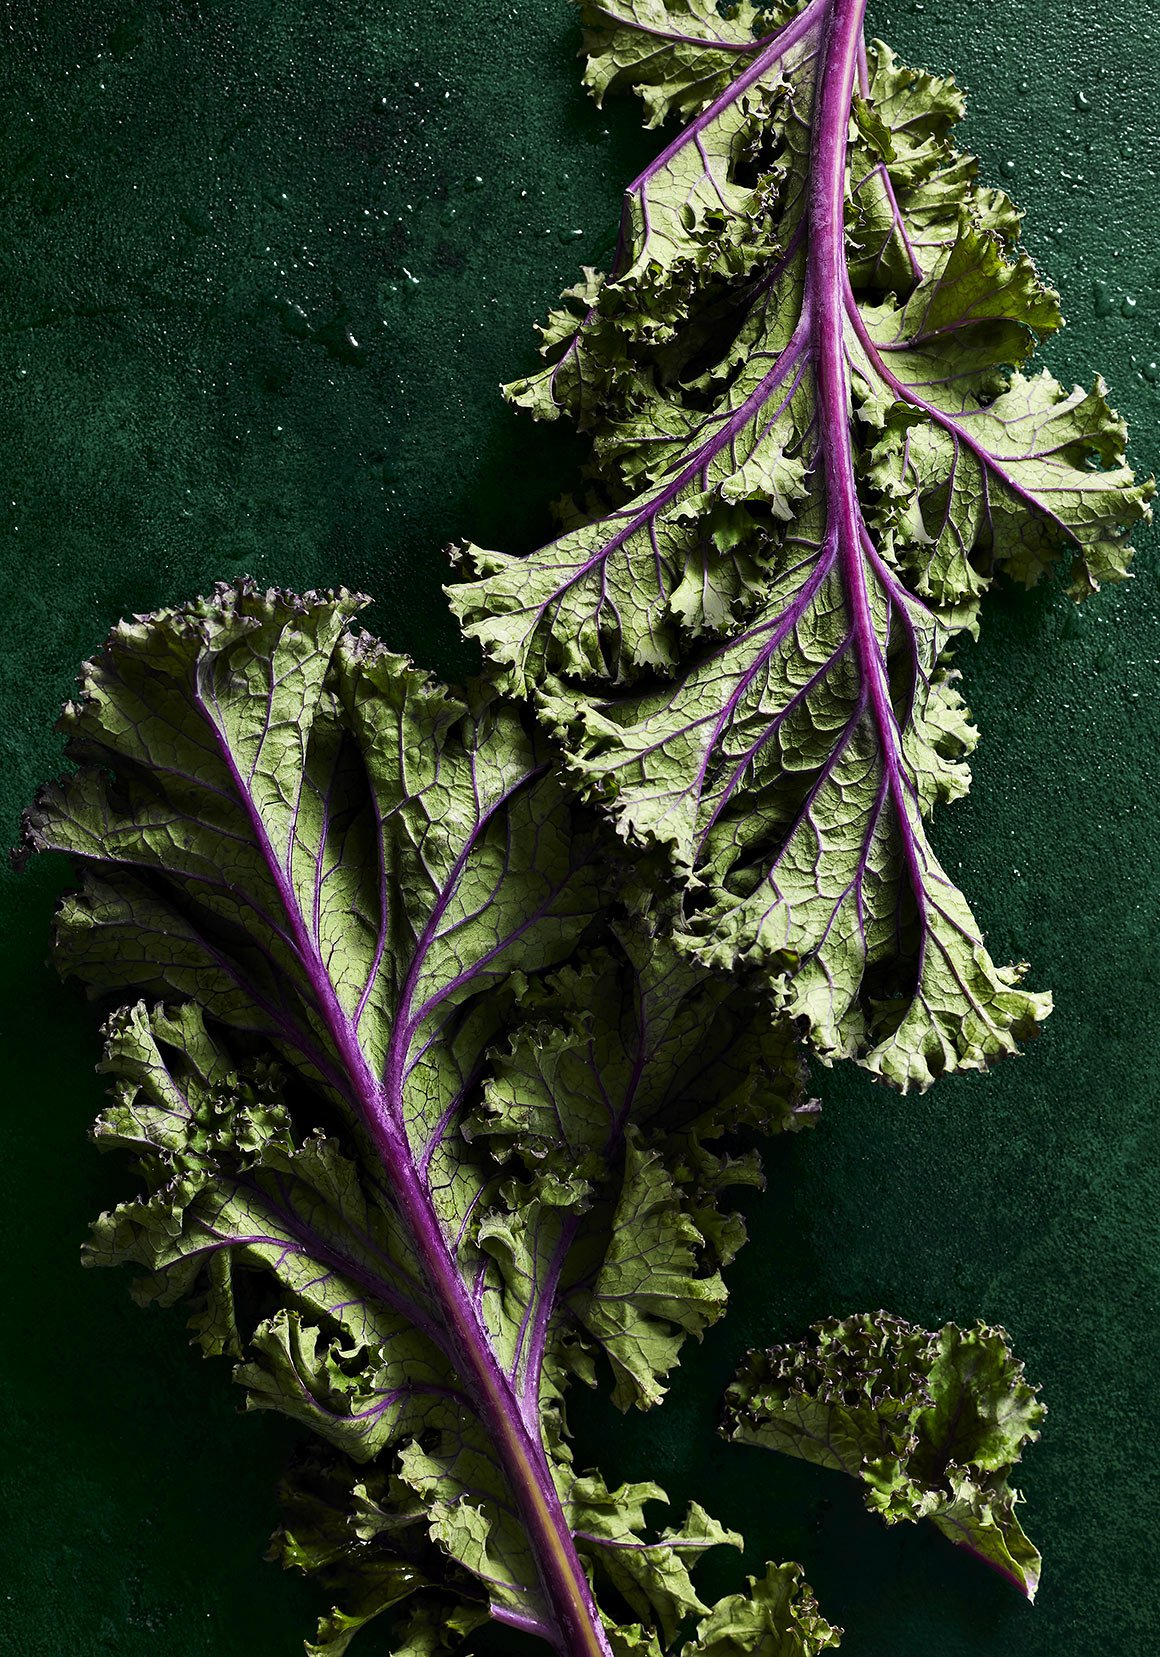 greens-cook-book-recipe-intuitive-eating-diet-kale-junkie-heath-wellness-food-photographer-kolenko.jpg